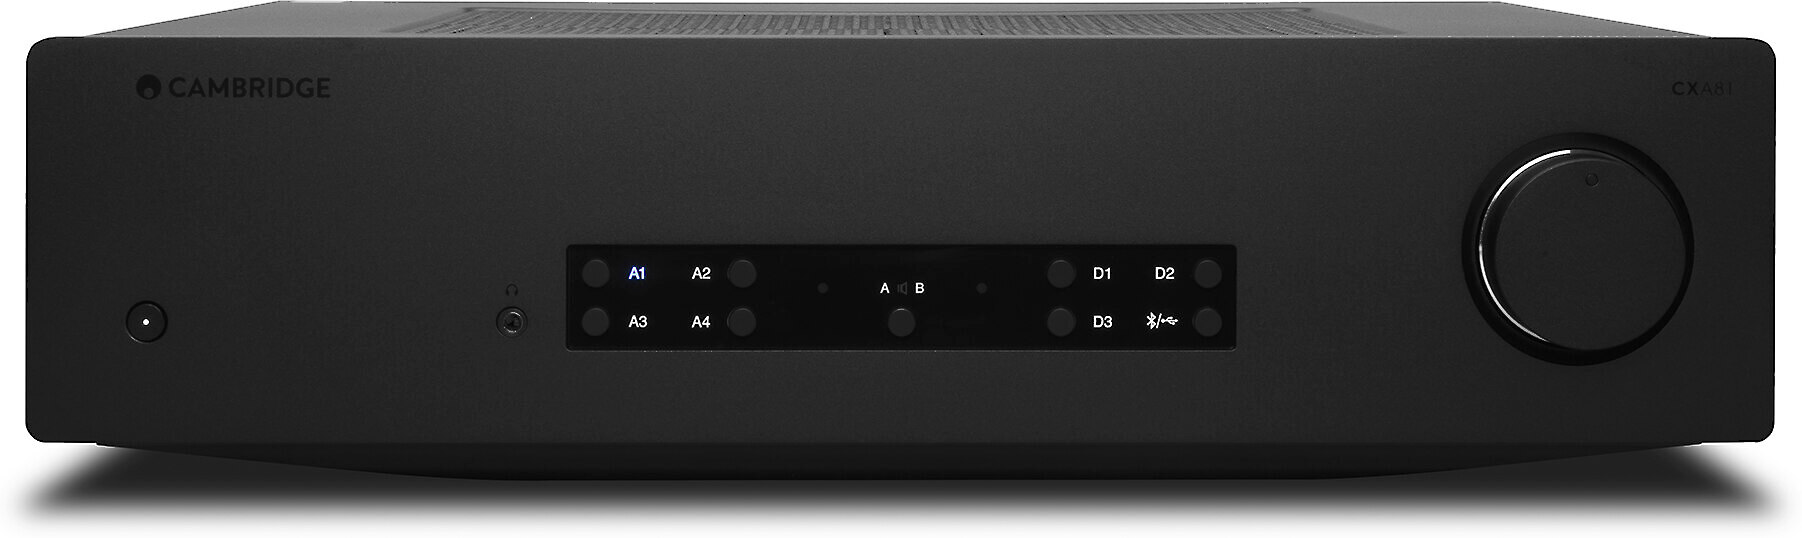 Cambridge Audio CXA81 Amplifier - Black Edition